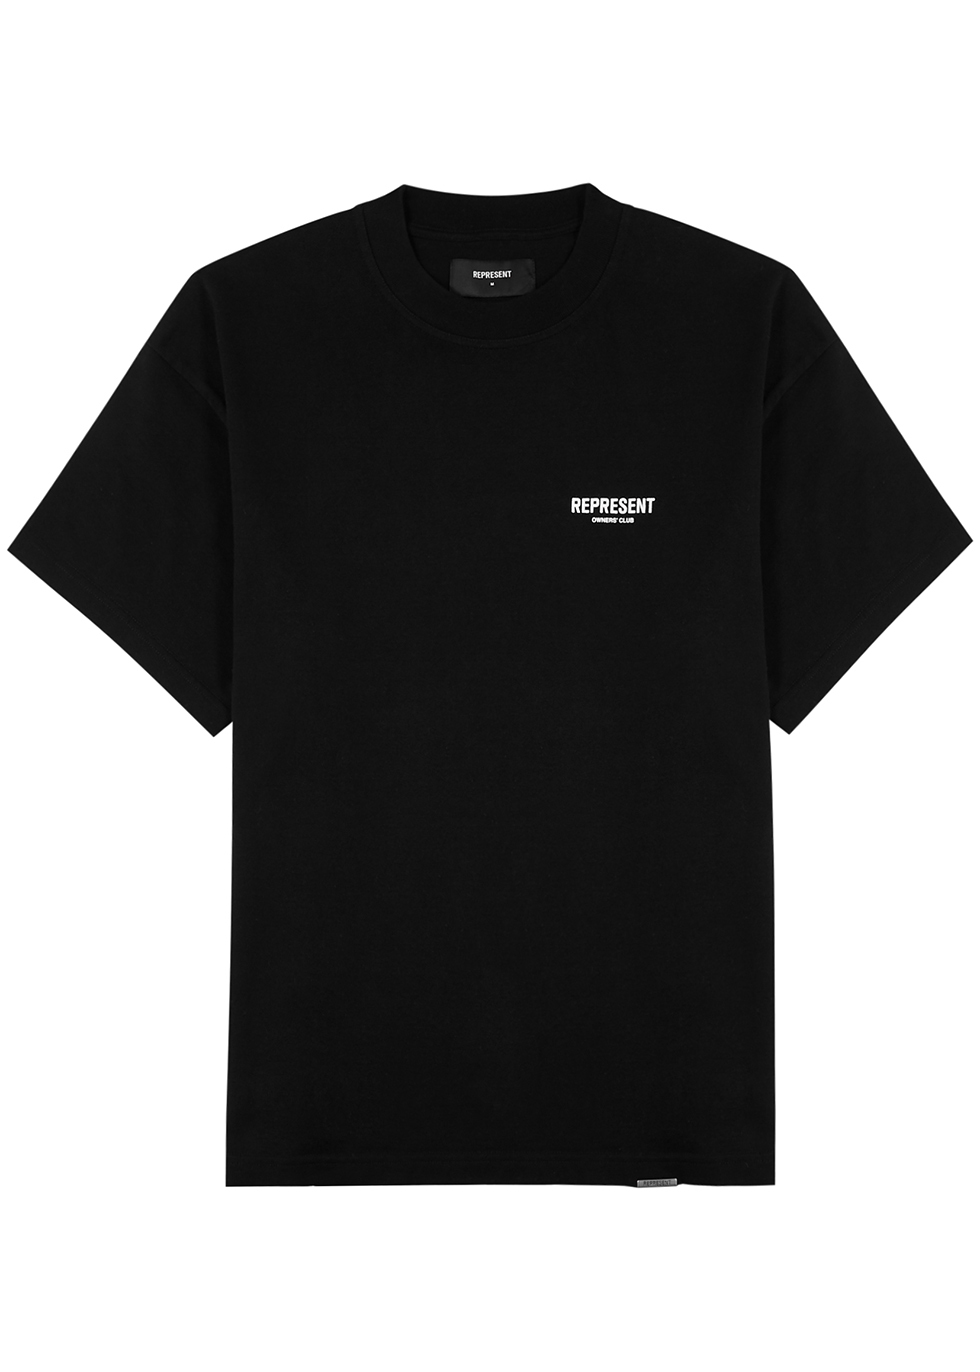 Represent Owners Club black cotton T-shirt - Harvey Nichols